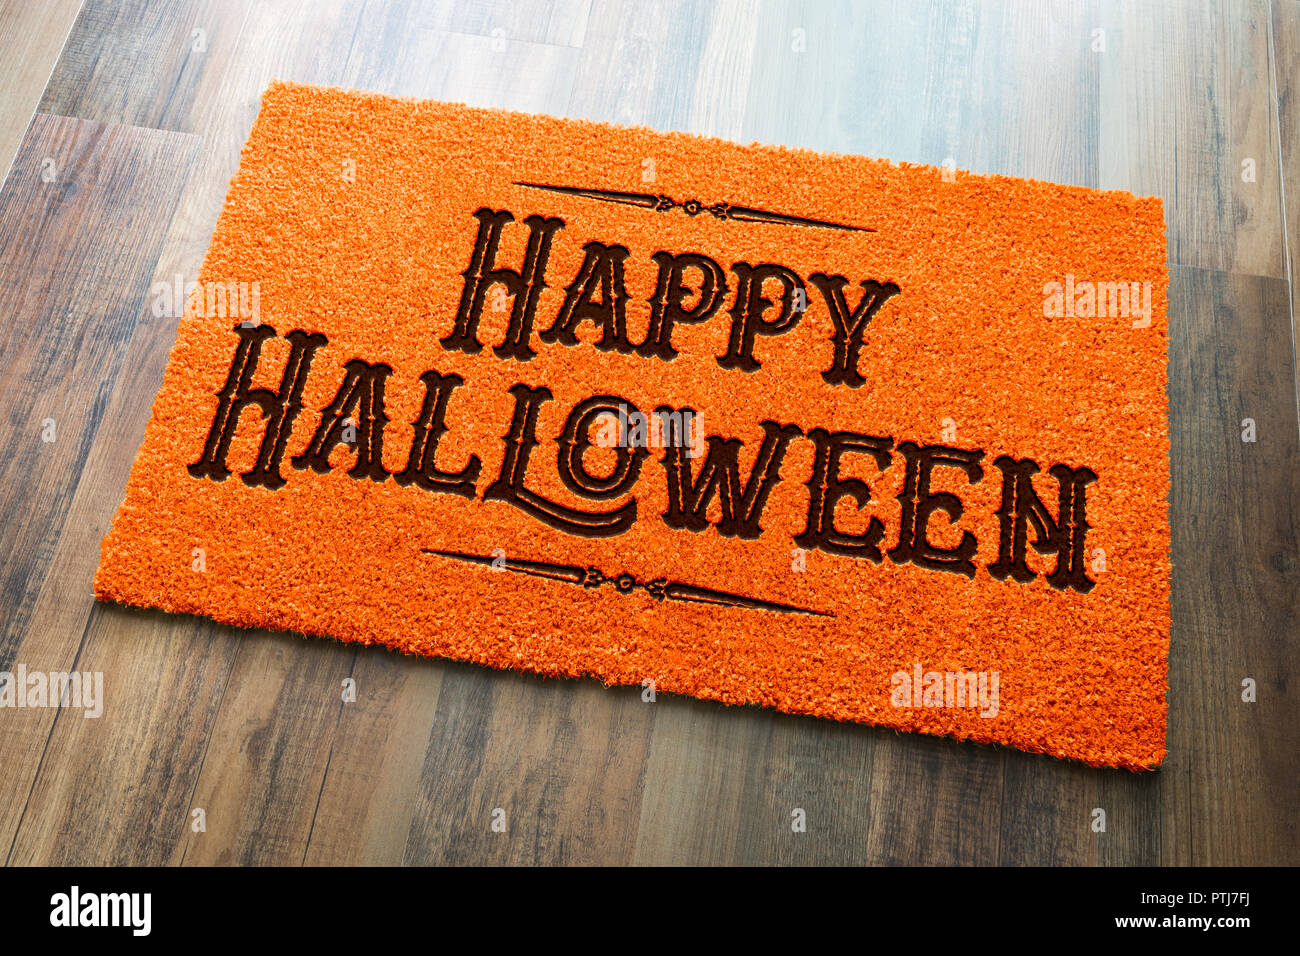 Happy Halloween Orange Welcome Mat On Wood Floor Background. Stock Photo